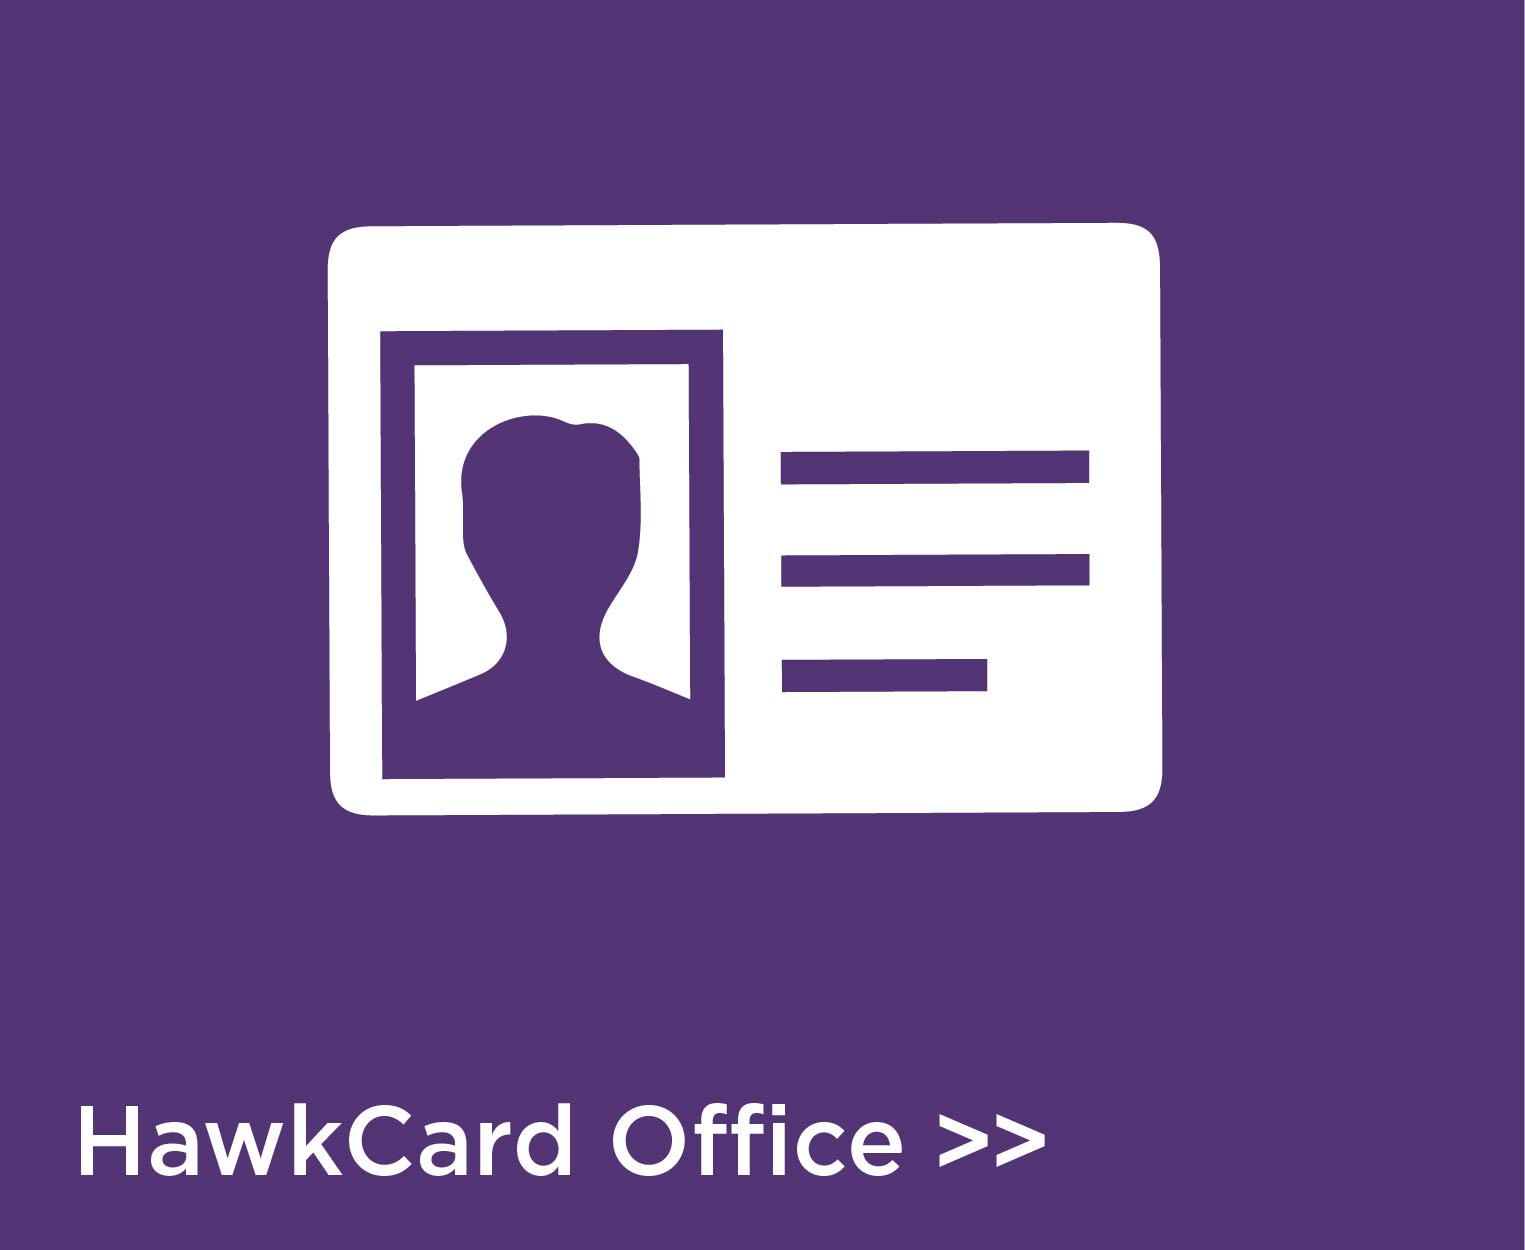 Hawkcard office